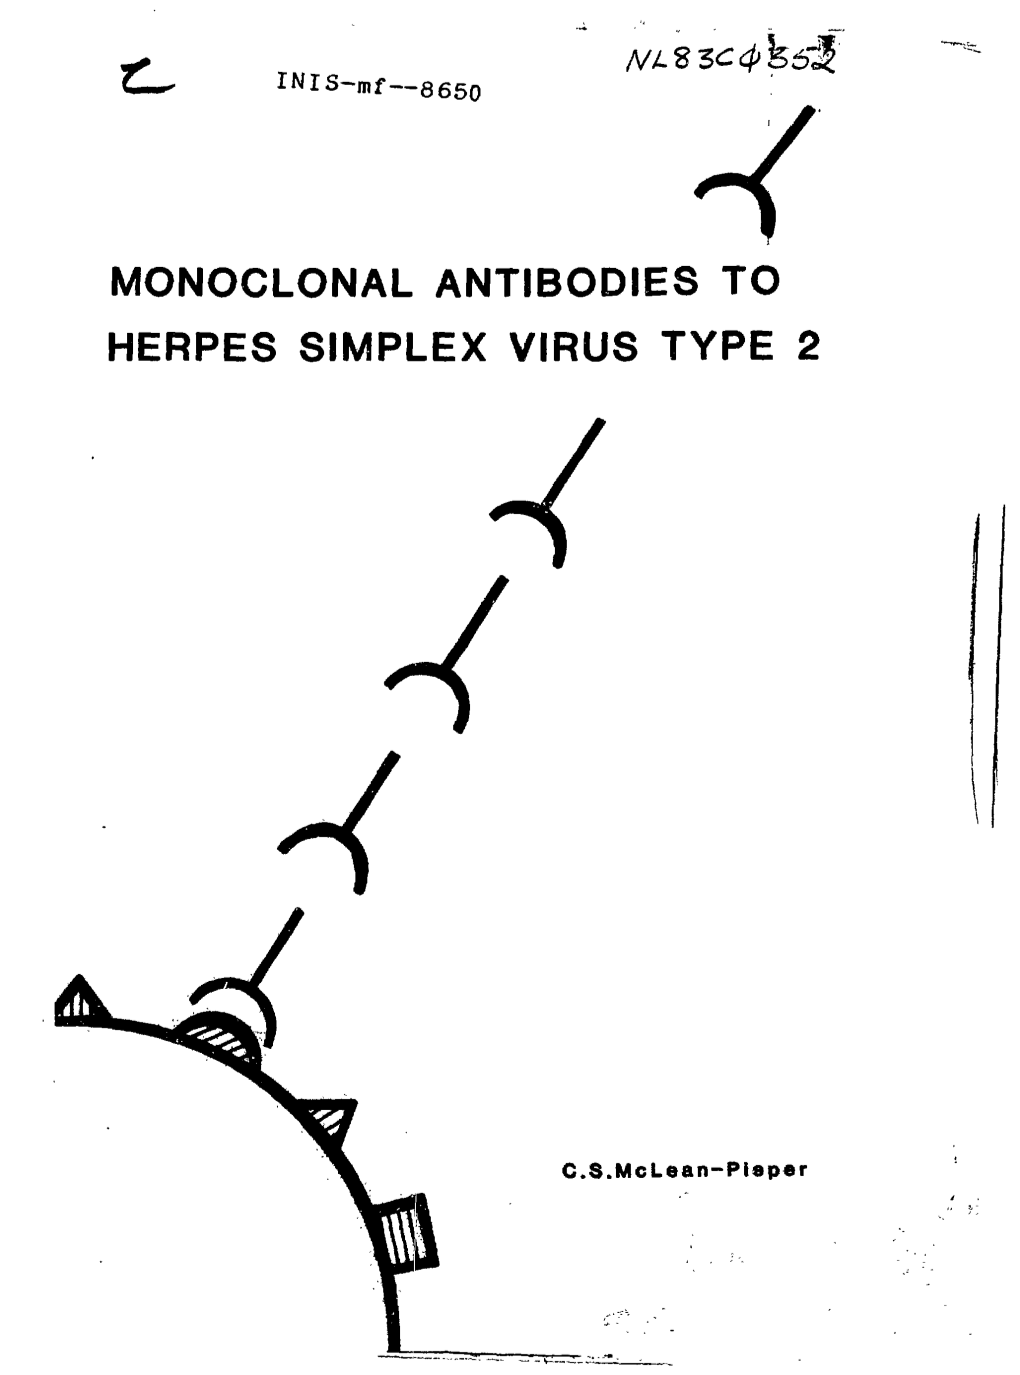 Monoclonal Antibodies to Herpes Simplex Virus Type 2